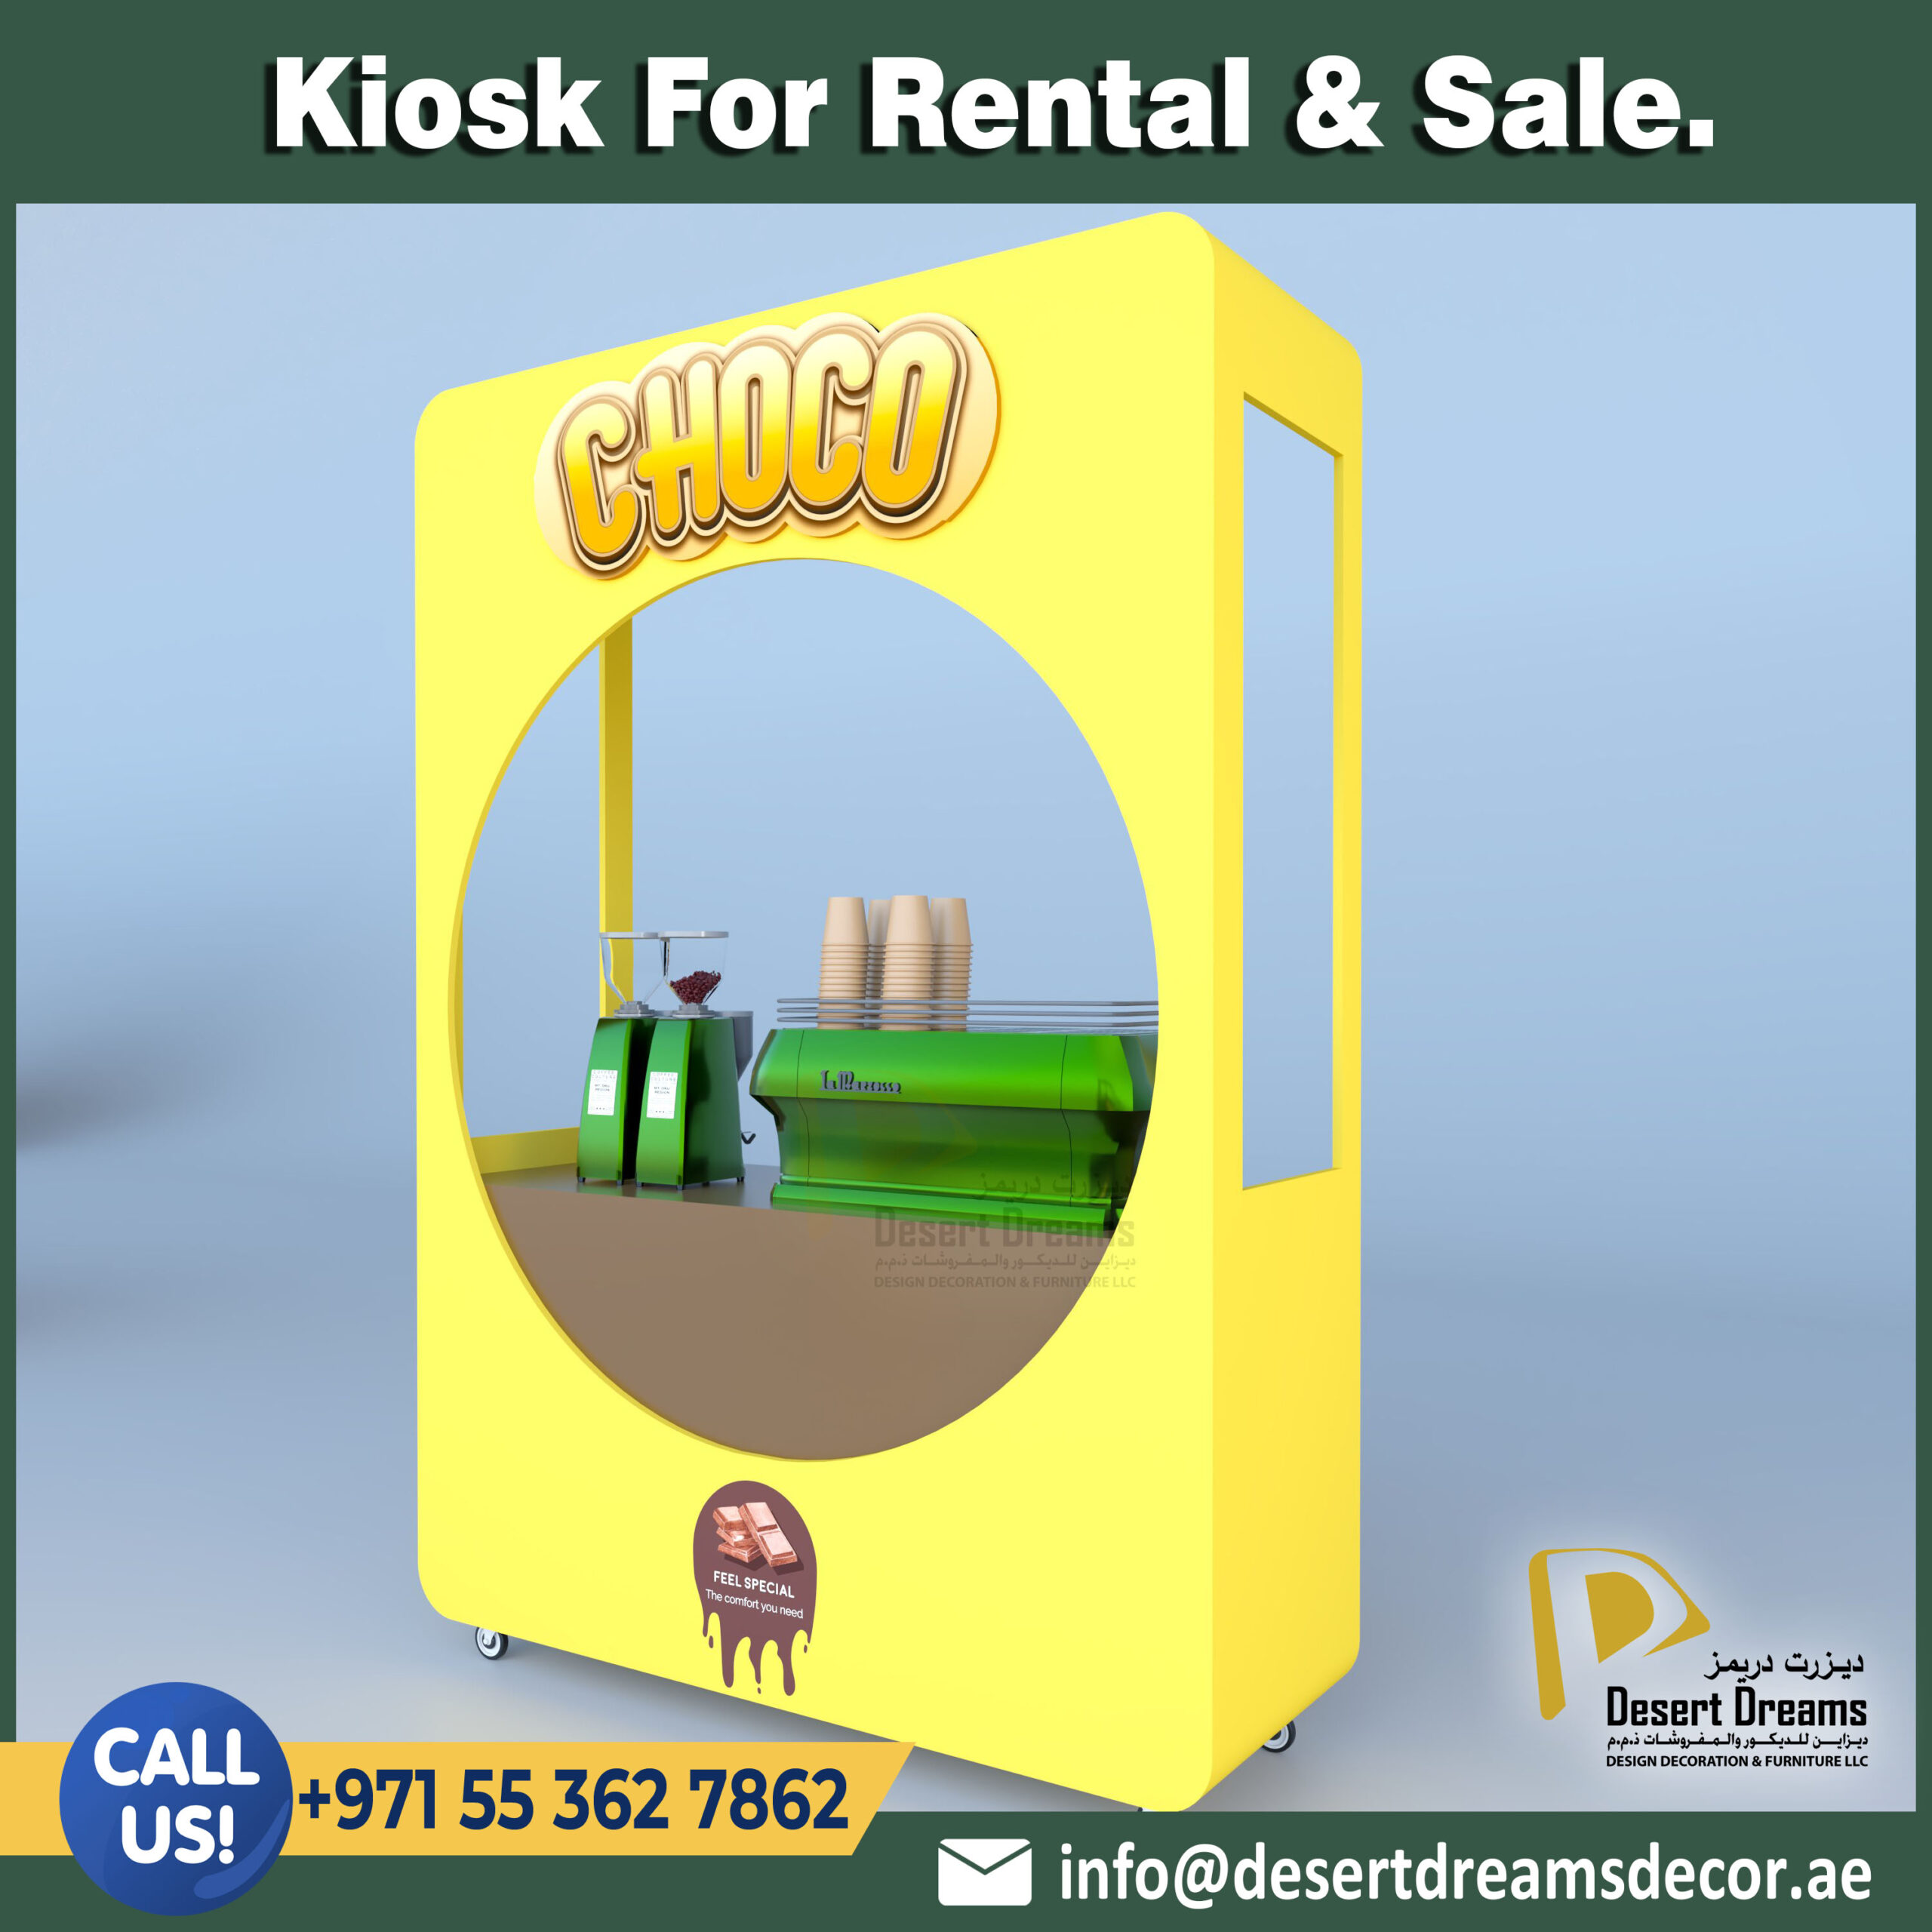 Kiosk for Rental and Sale in UAE (3).jpg